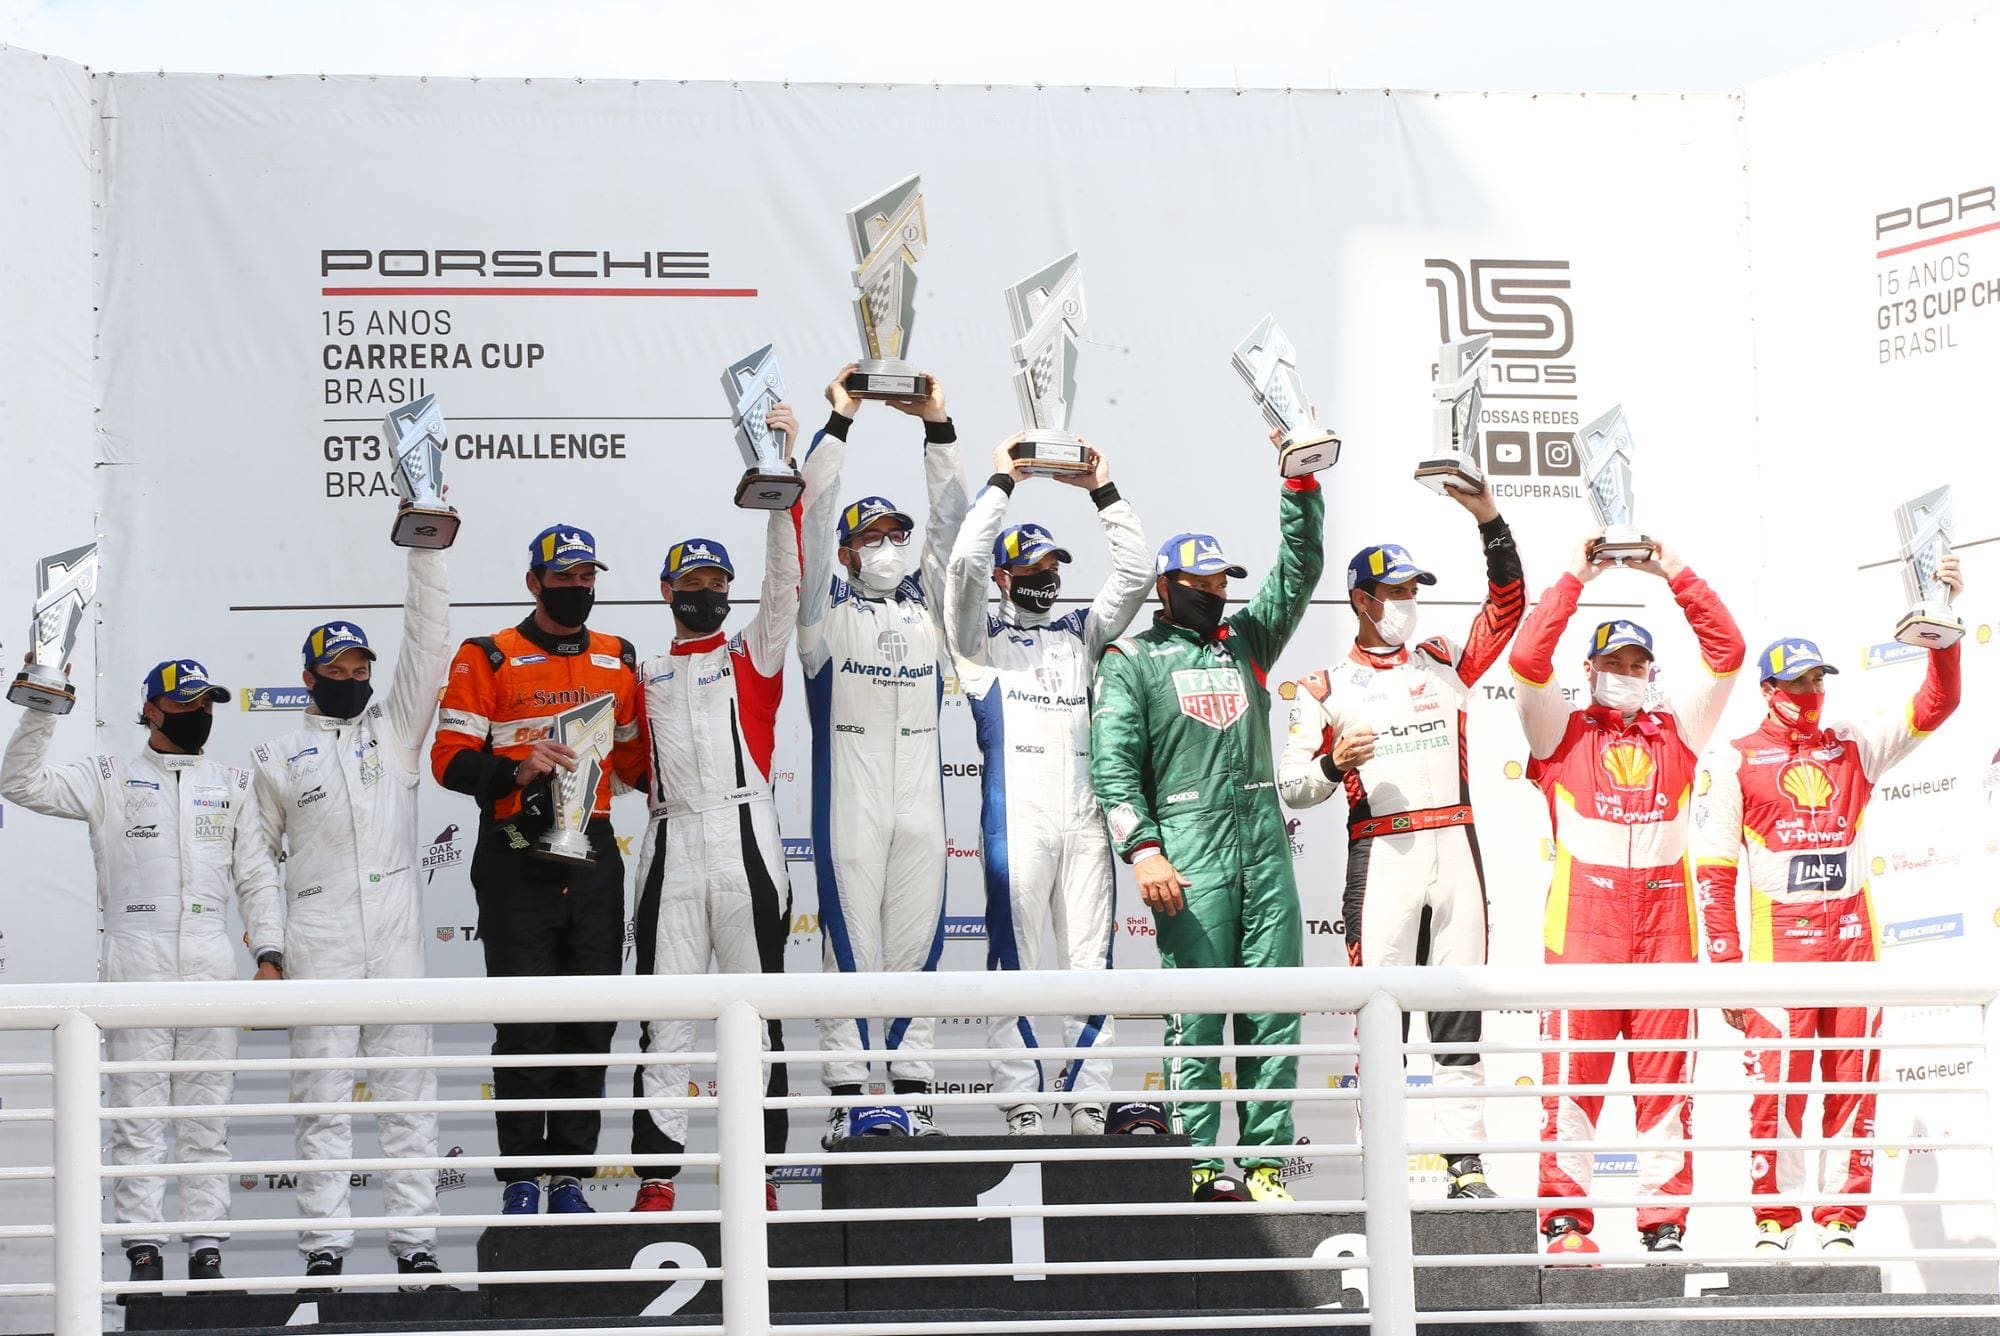 Pódio Carrera Cup (300 km de Goiânia - Porsche Cup Endurance Series)